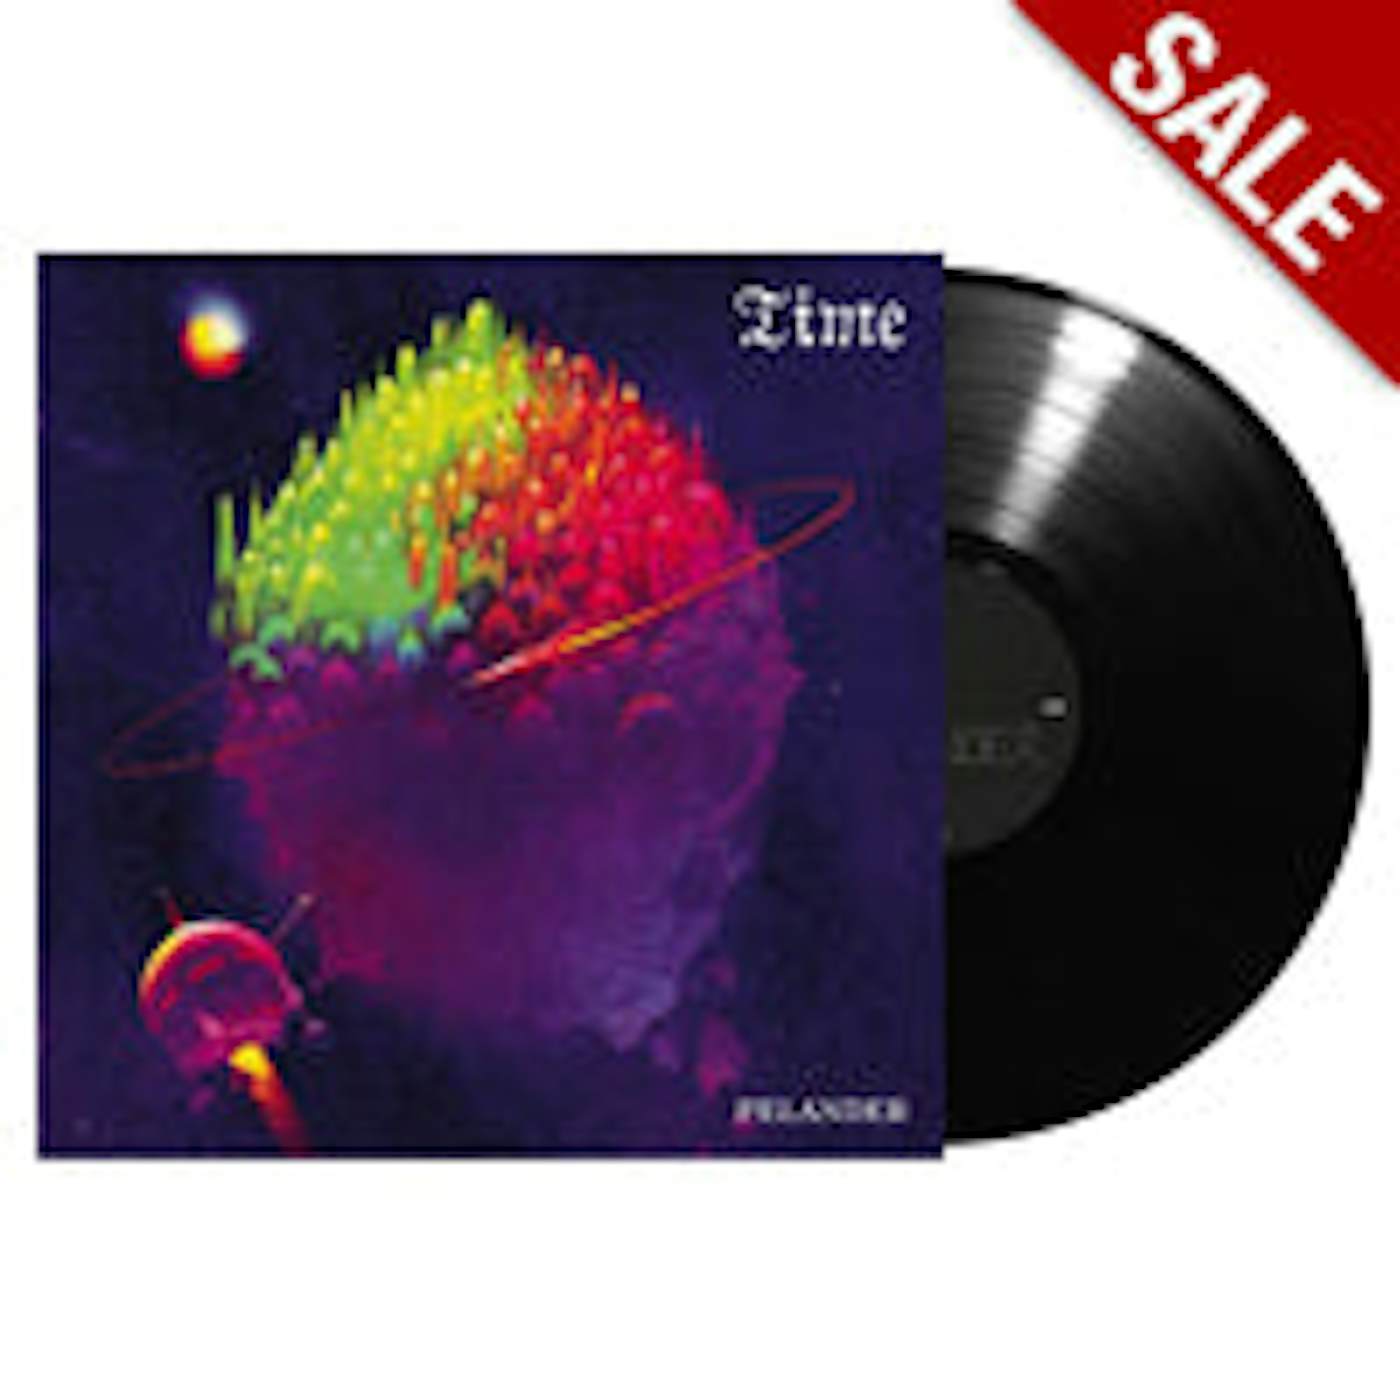 Pelander LP - Time (Vinyl)